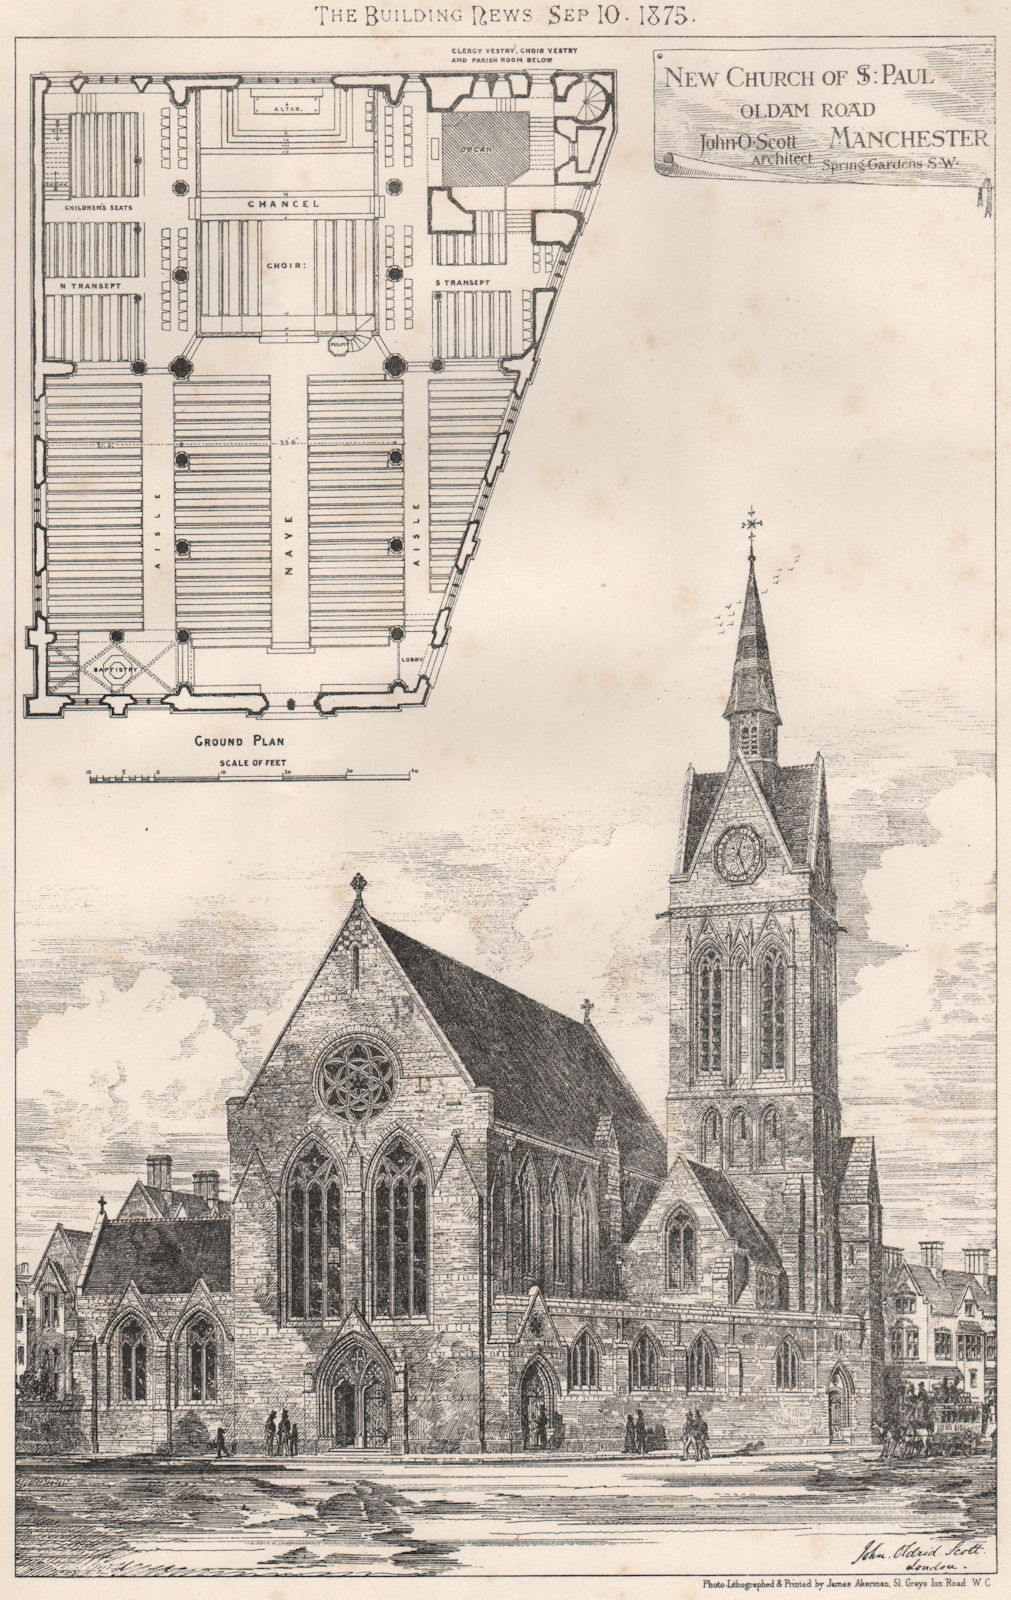 Associate Product St Paul's church, Oldham Road, Manchester, Spring Gardens; John Scott Archt 1875